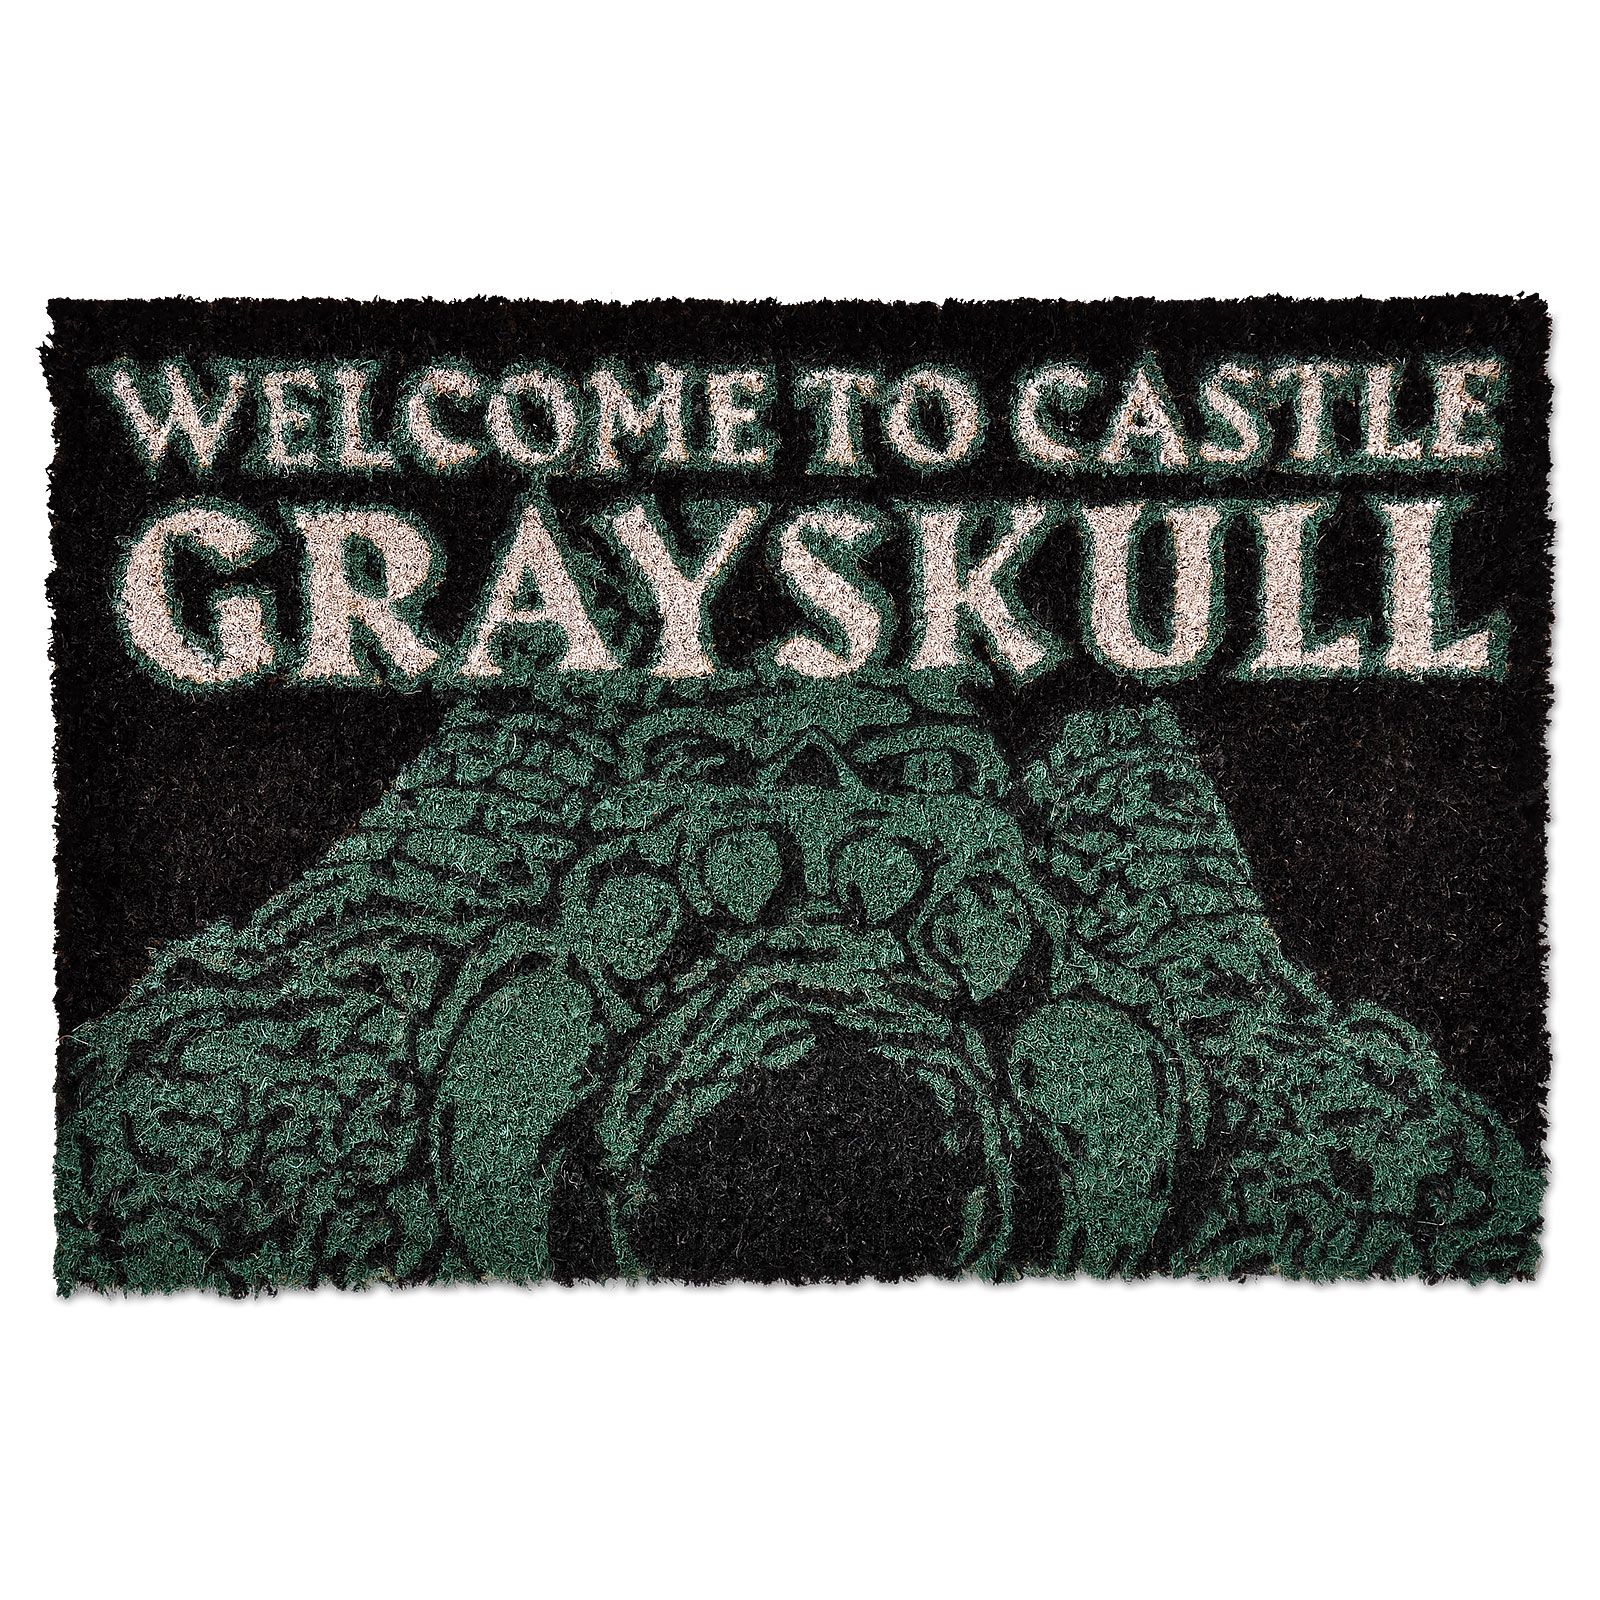 Masters of the Universe - Grayskull Doormat